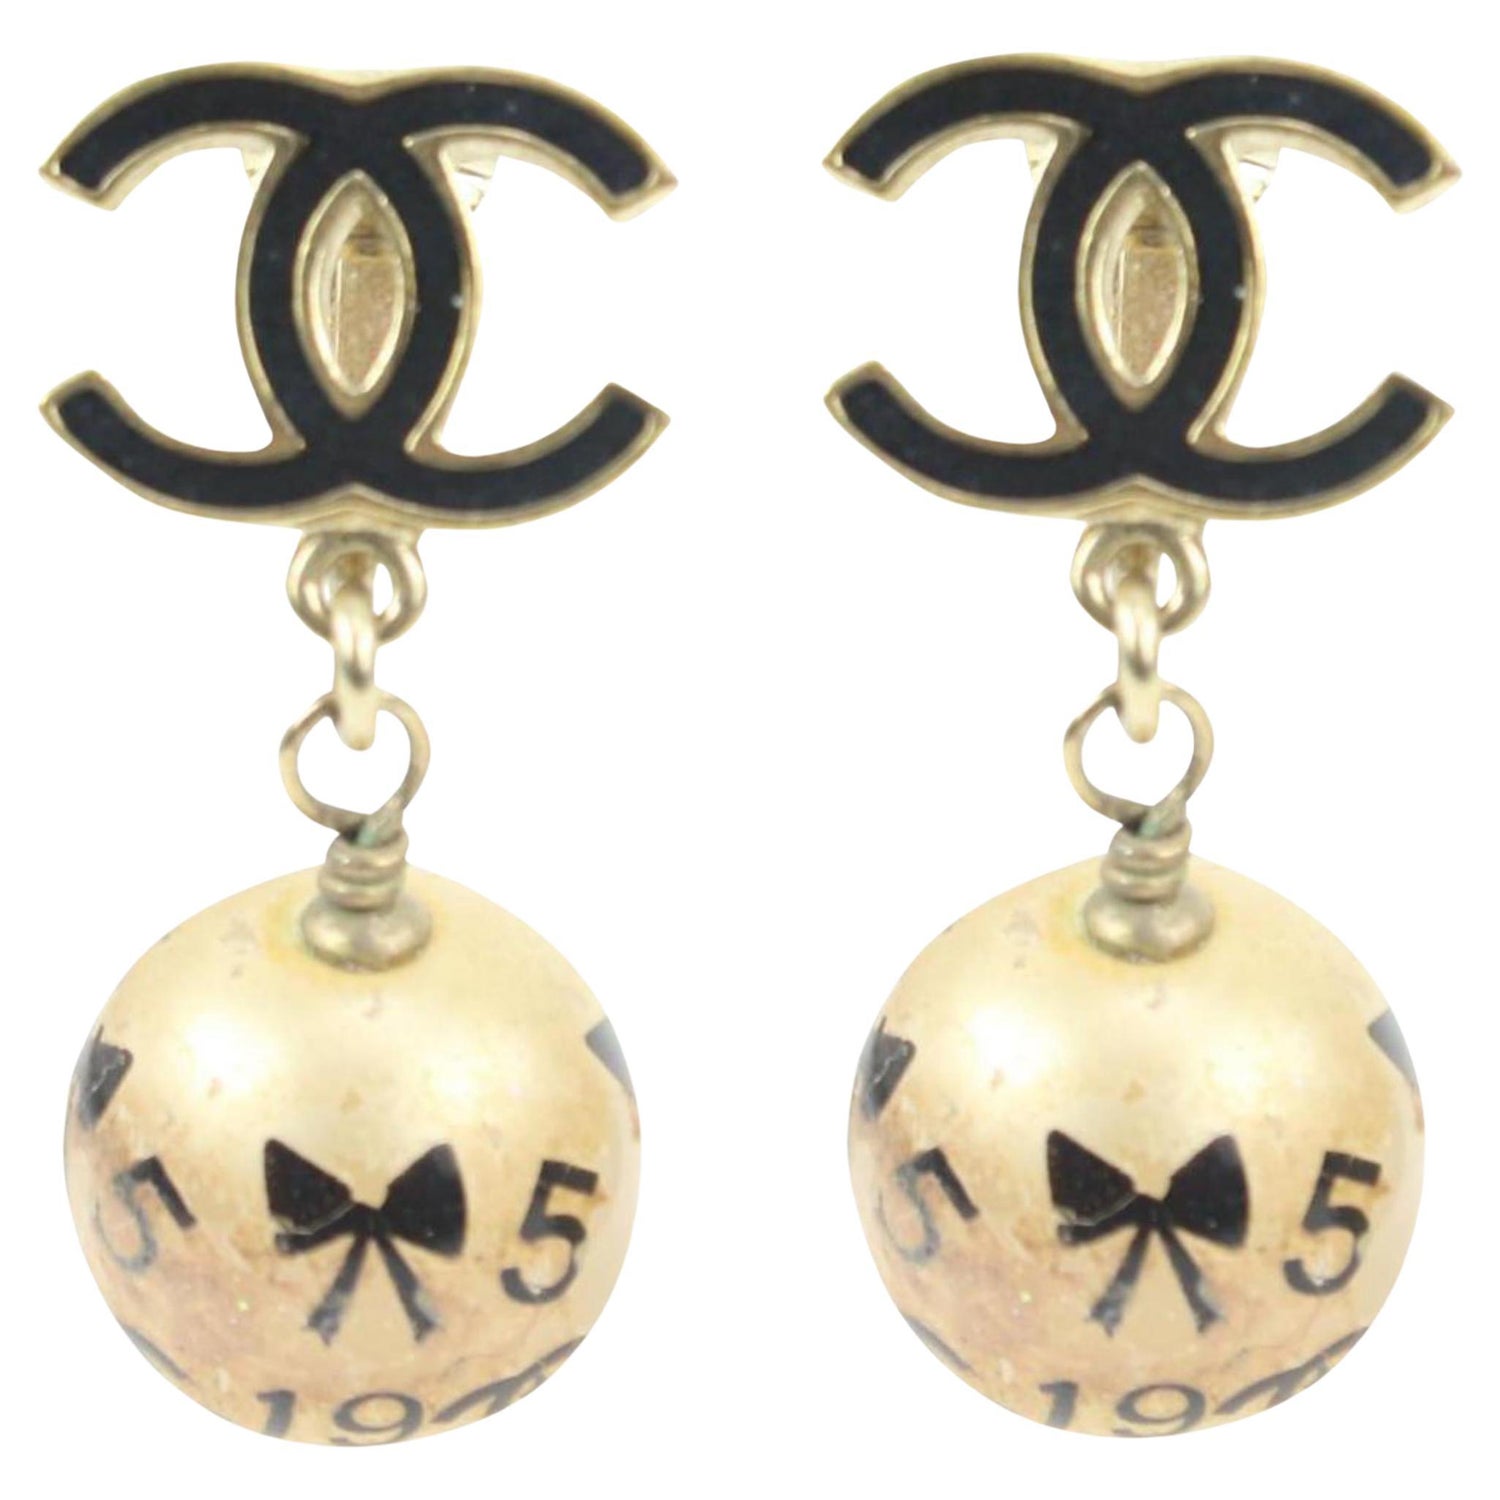 Earrings Chanel 5 - 12 For Sale on 1stDibs  chanel 5 earrings, chanel no 5  earrings, chanel earrings 5